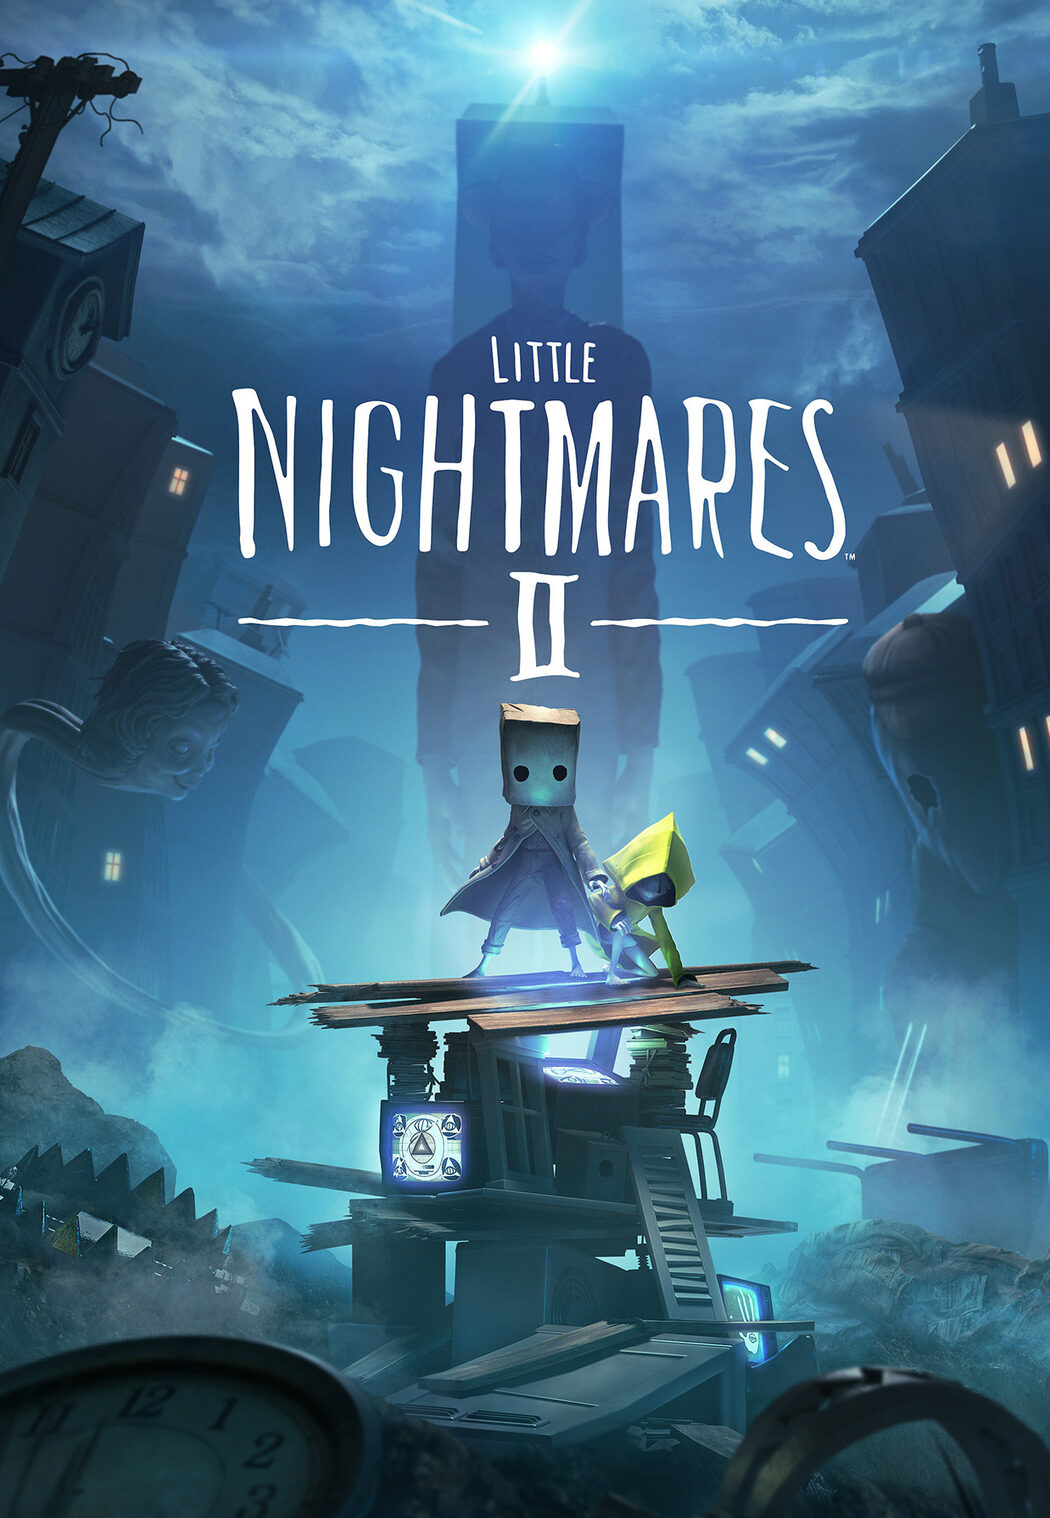 Little Nightmares 2: requisitos e como baixar no PC, PS4, Xbox e